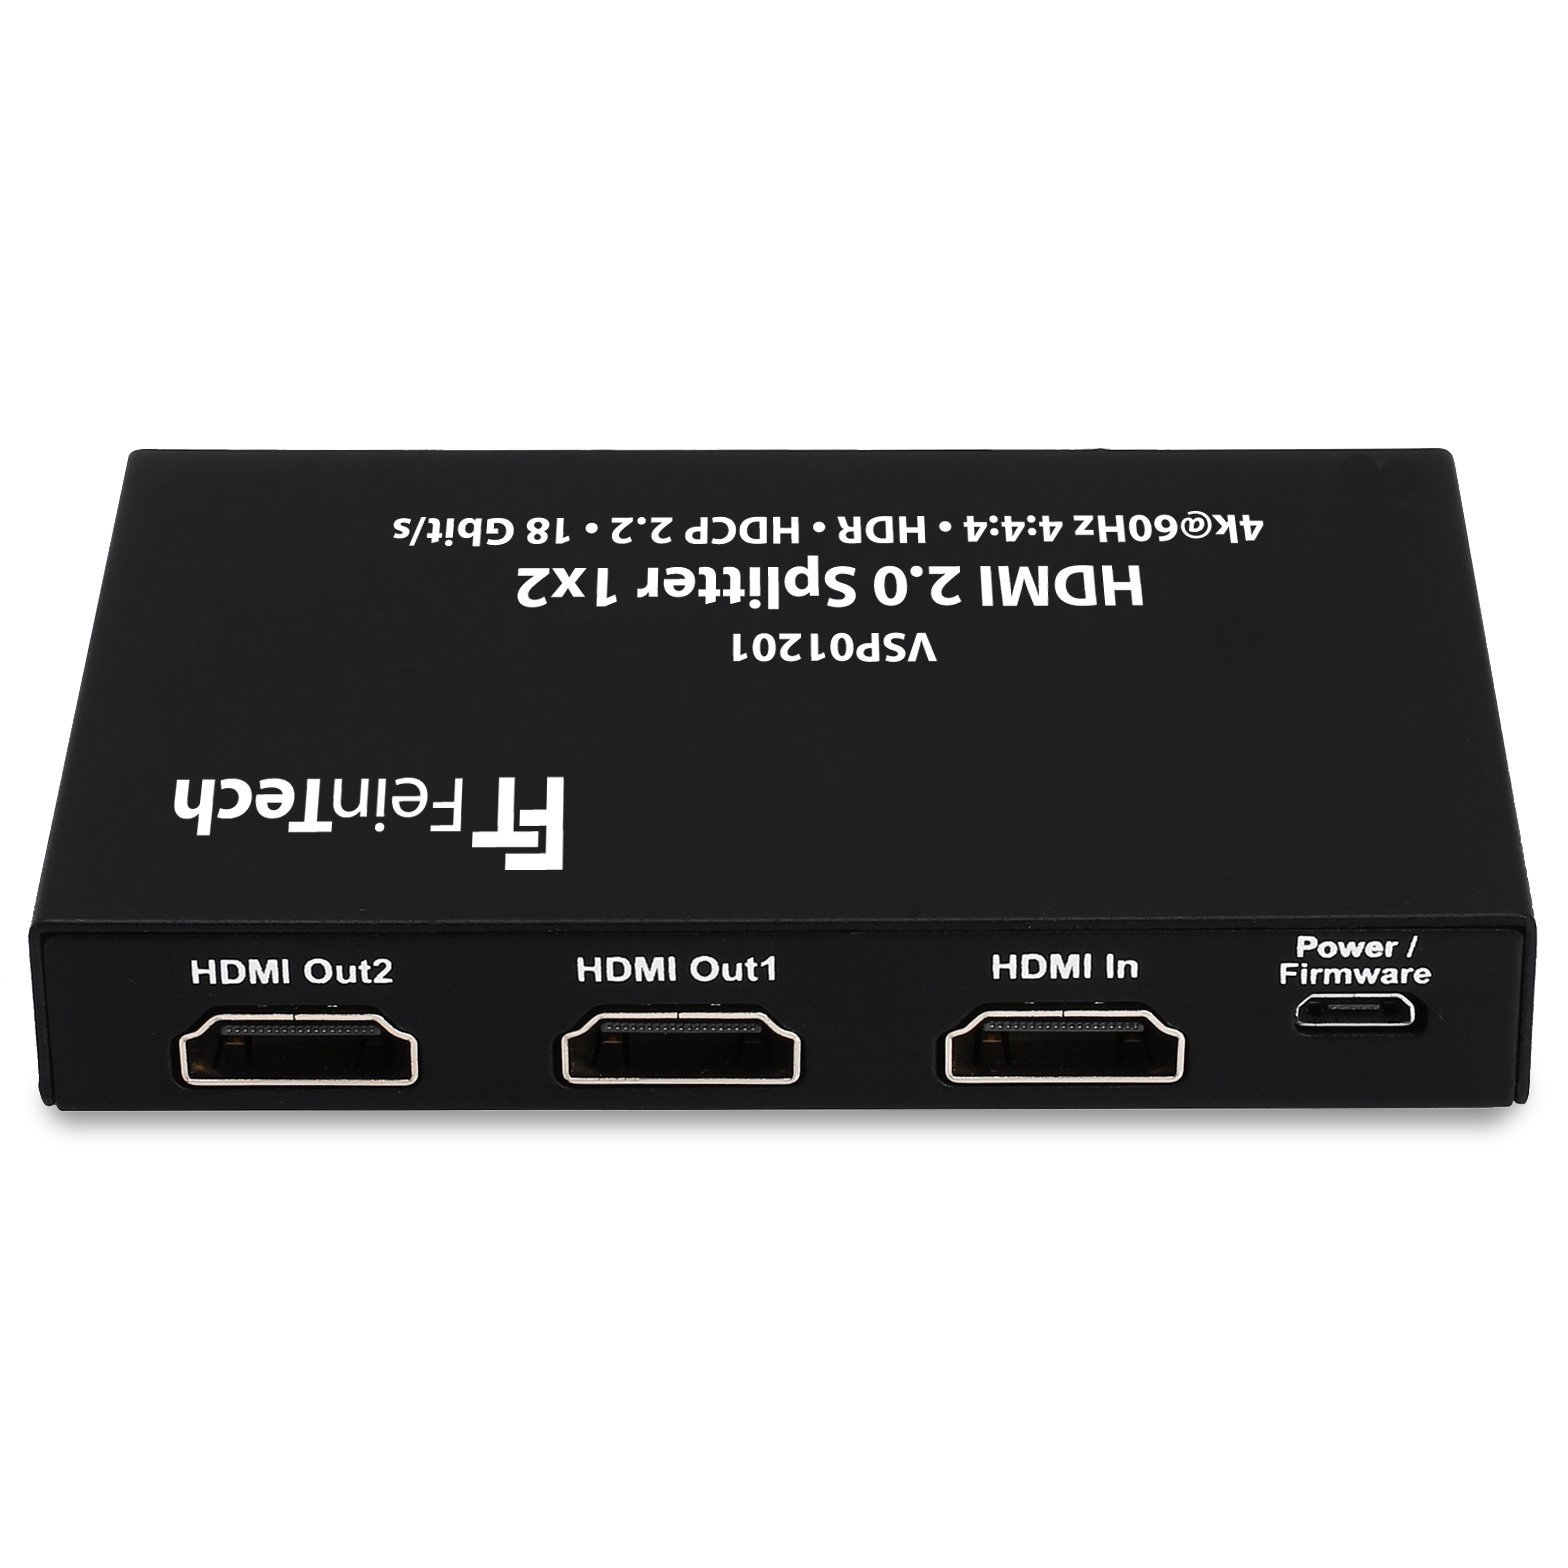 2.0 FEINTECH 4K Out VSP01201 In 60Hz HDMI 1 2 Splitter